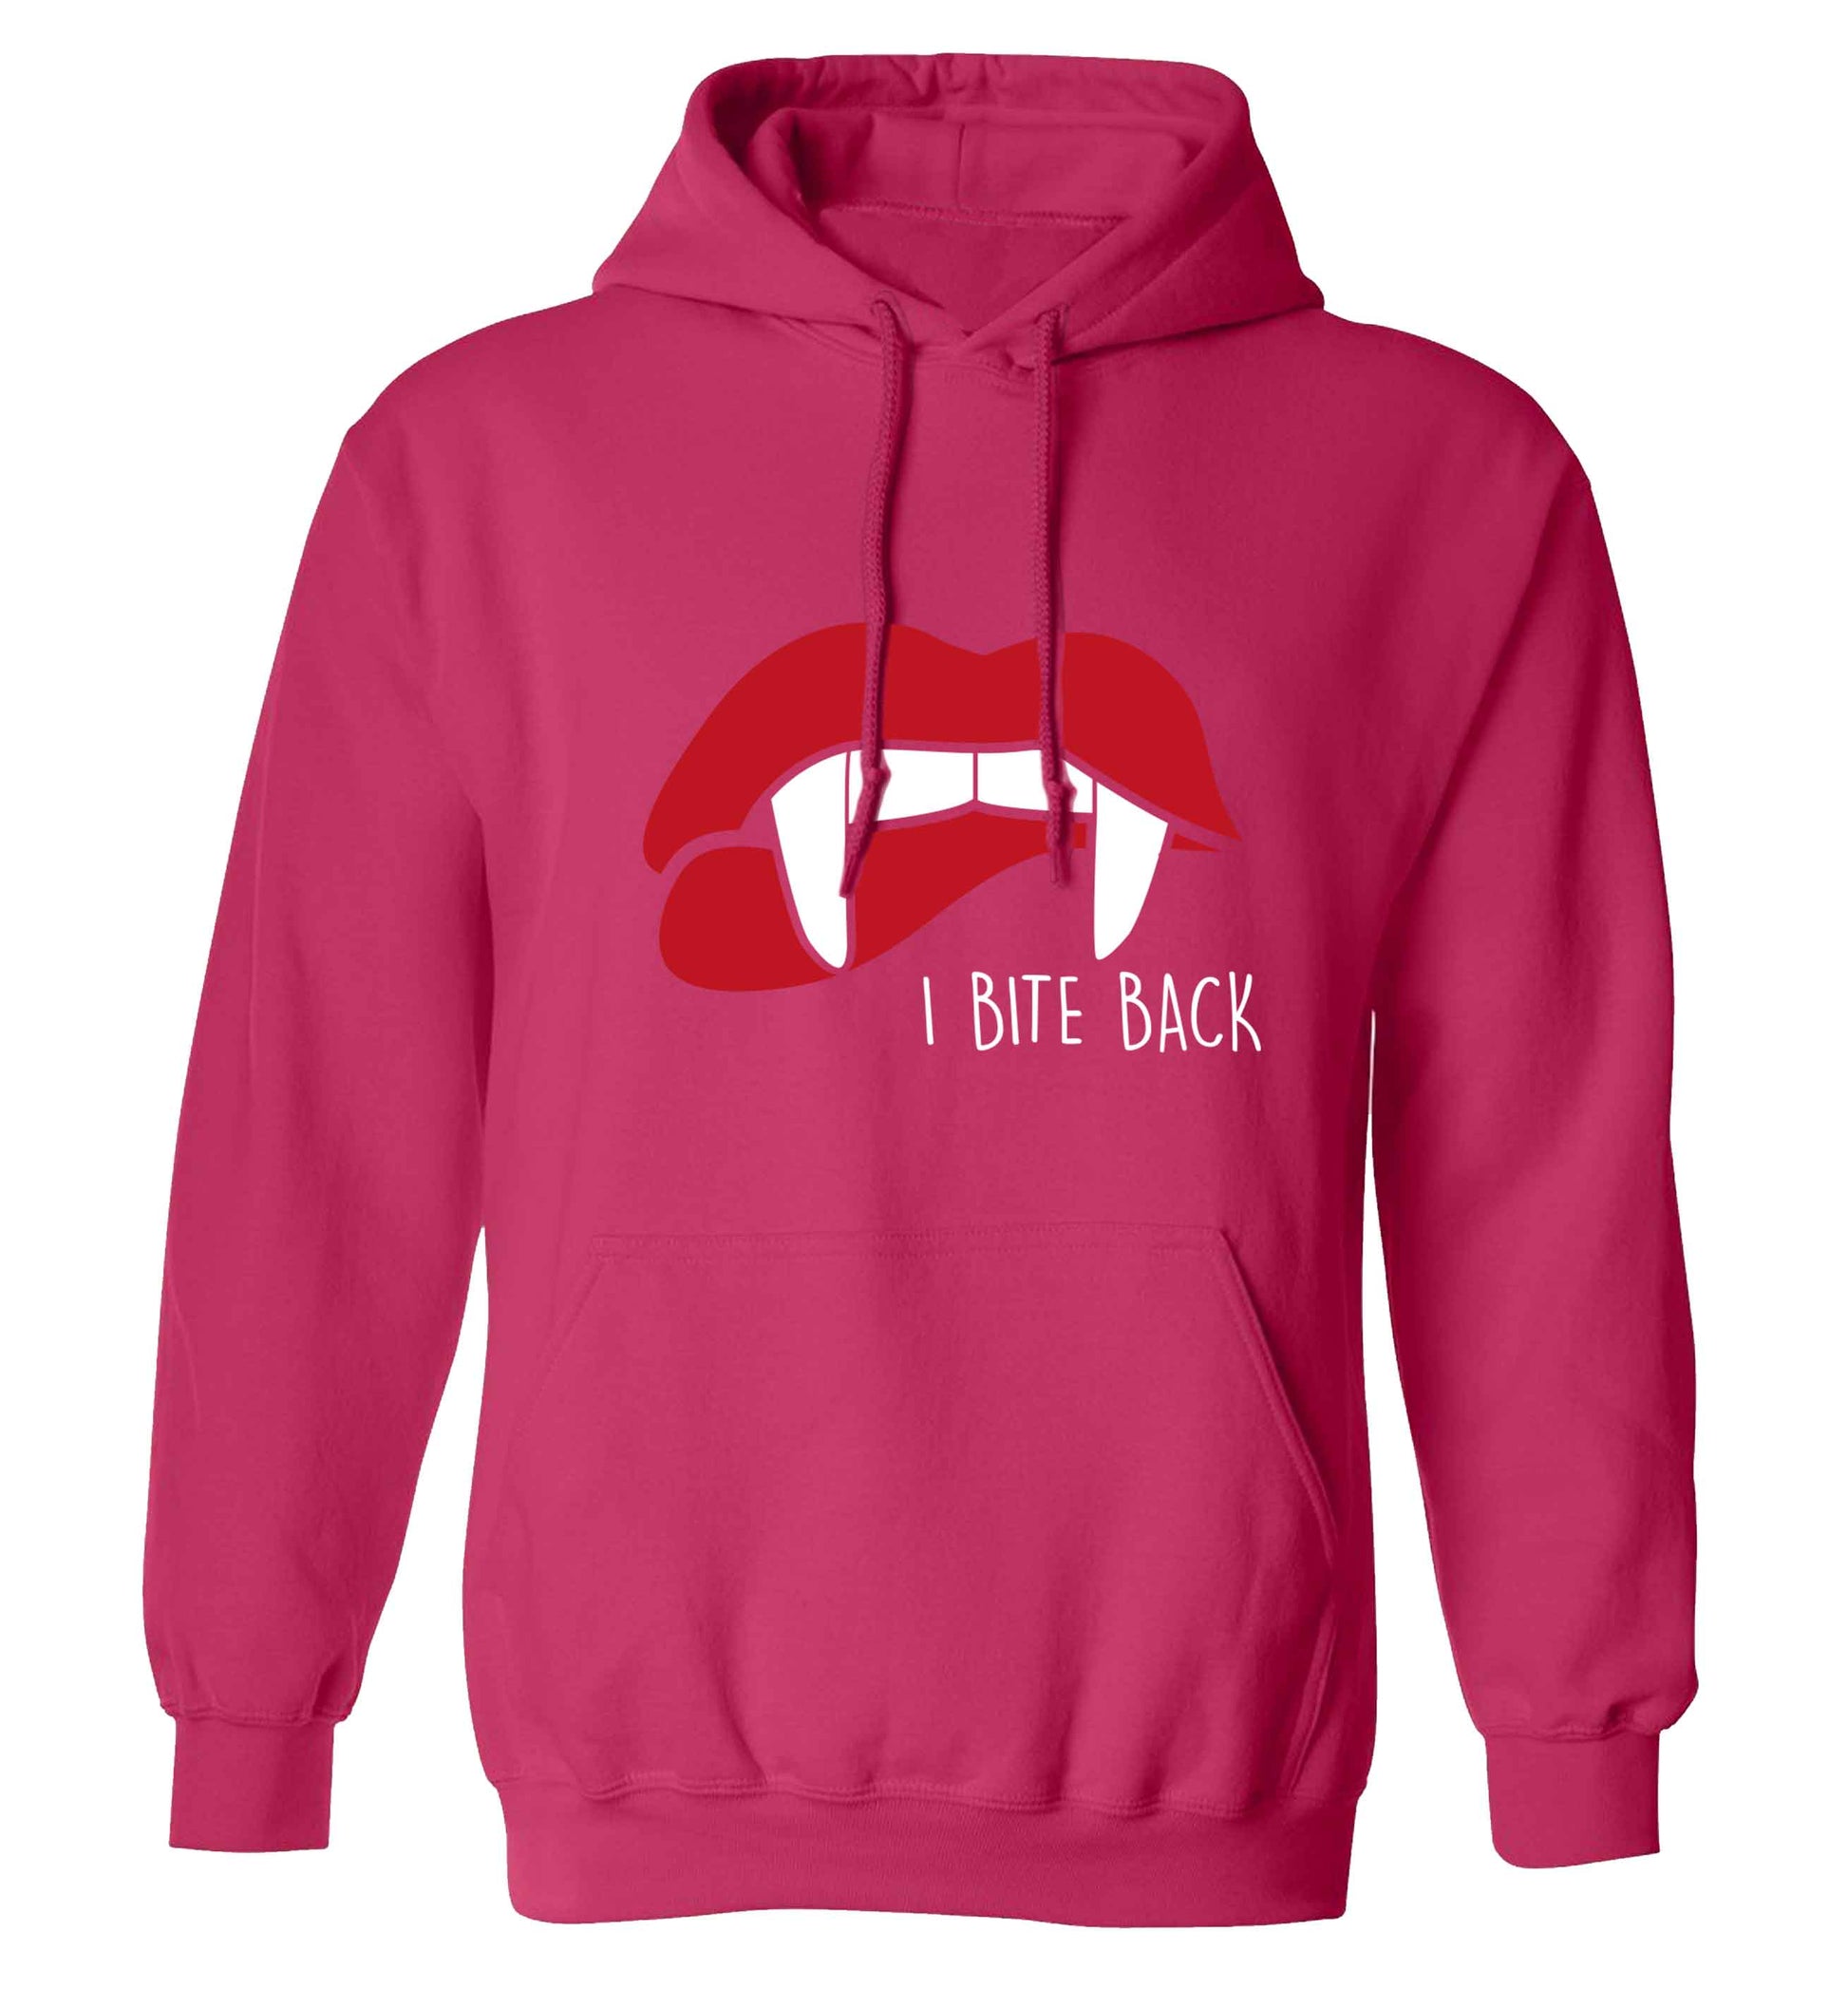 I bite back adults unisex pink hoodie 2XL